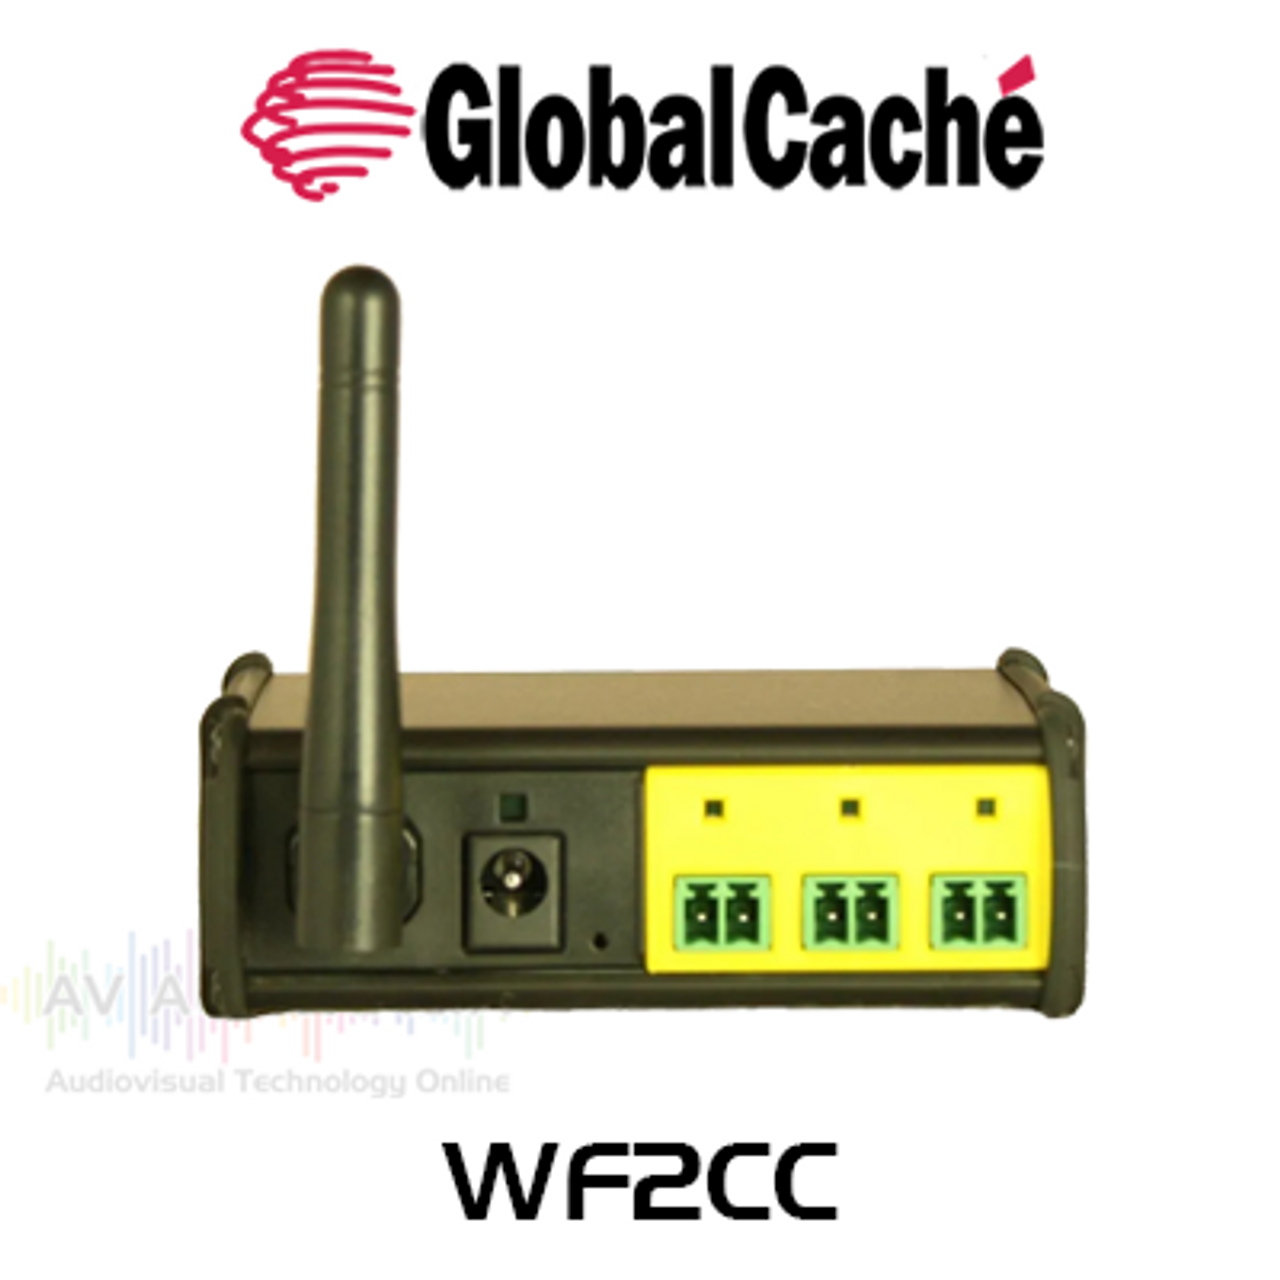 Global Cache WF2CC iTach WiFi To Contact Closure Module (Relay)